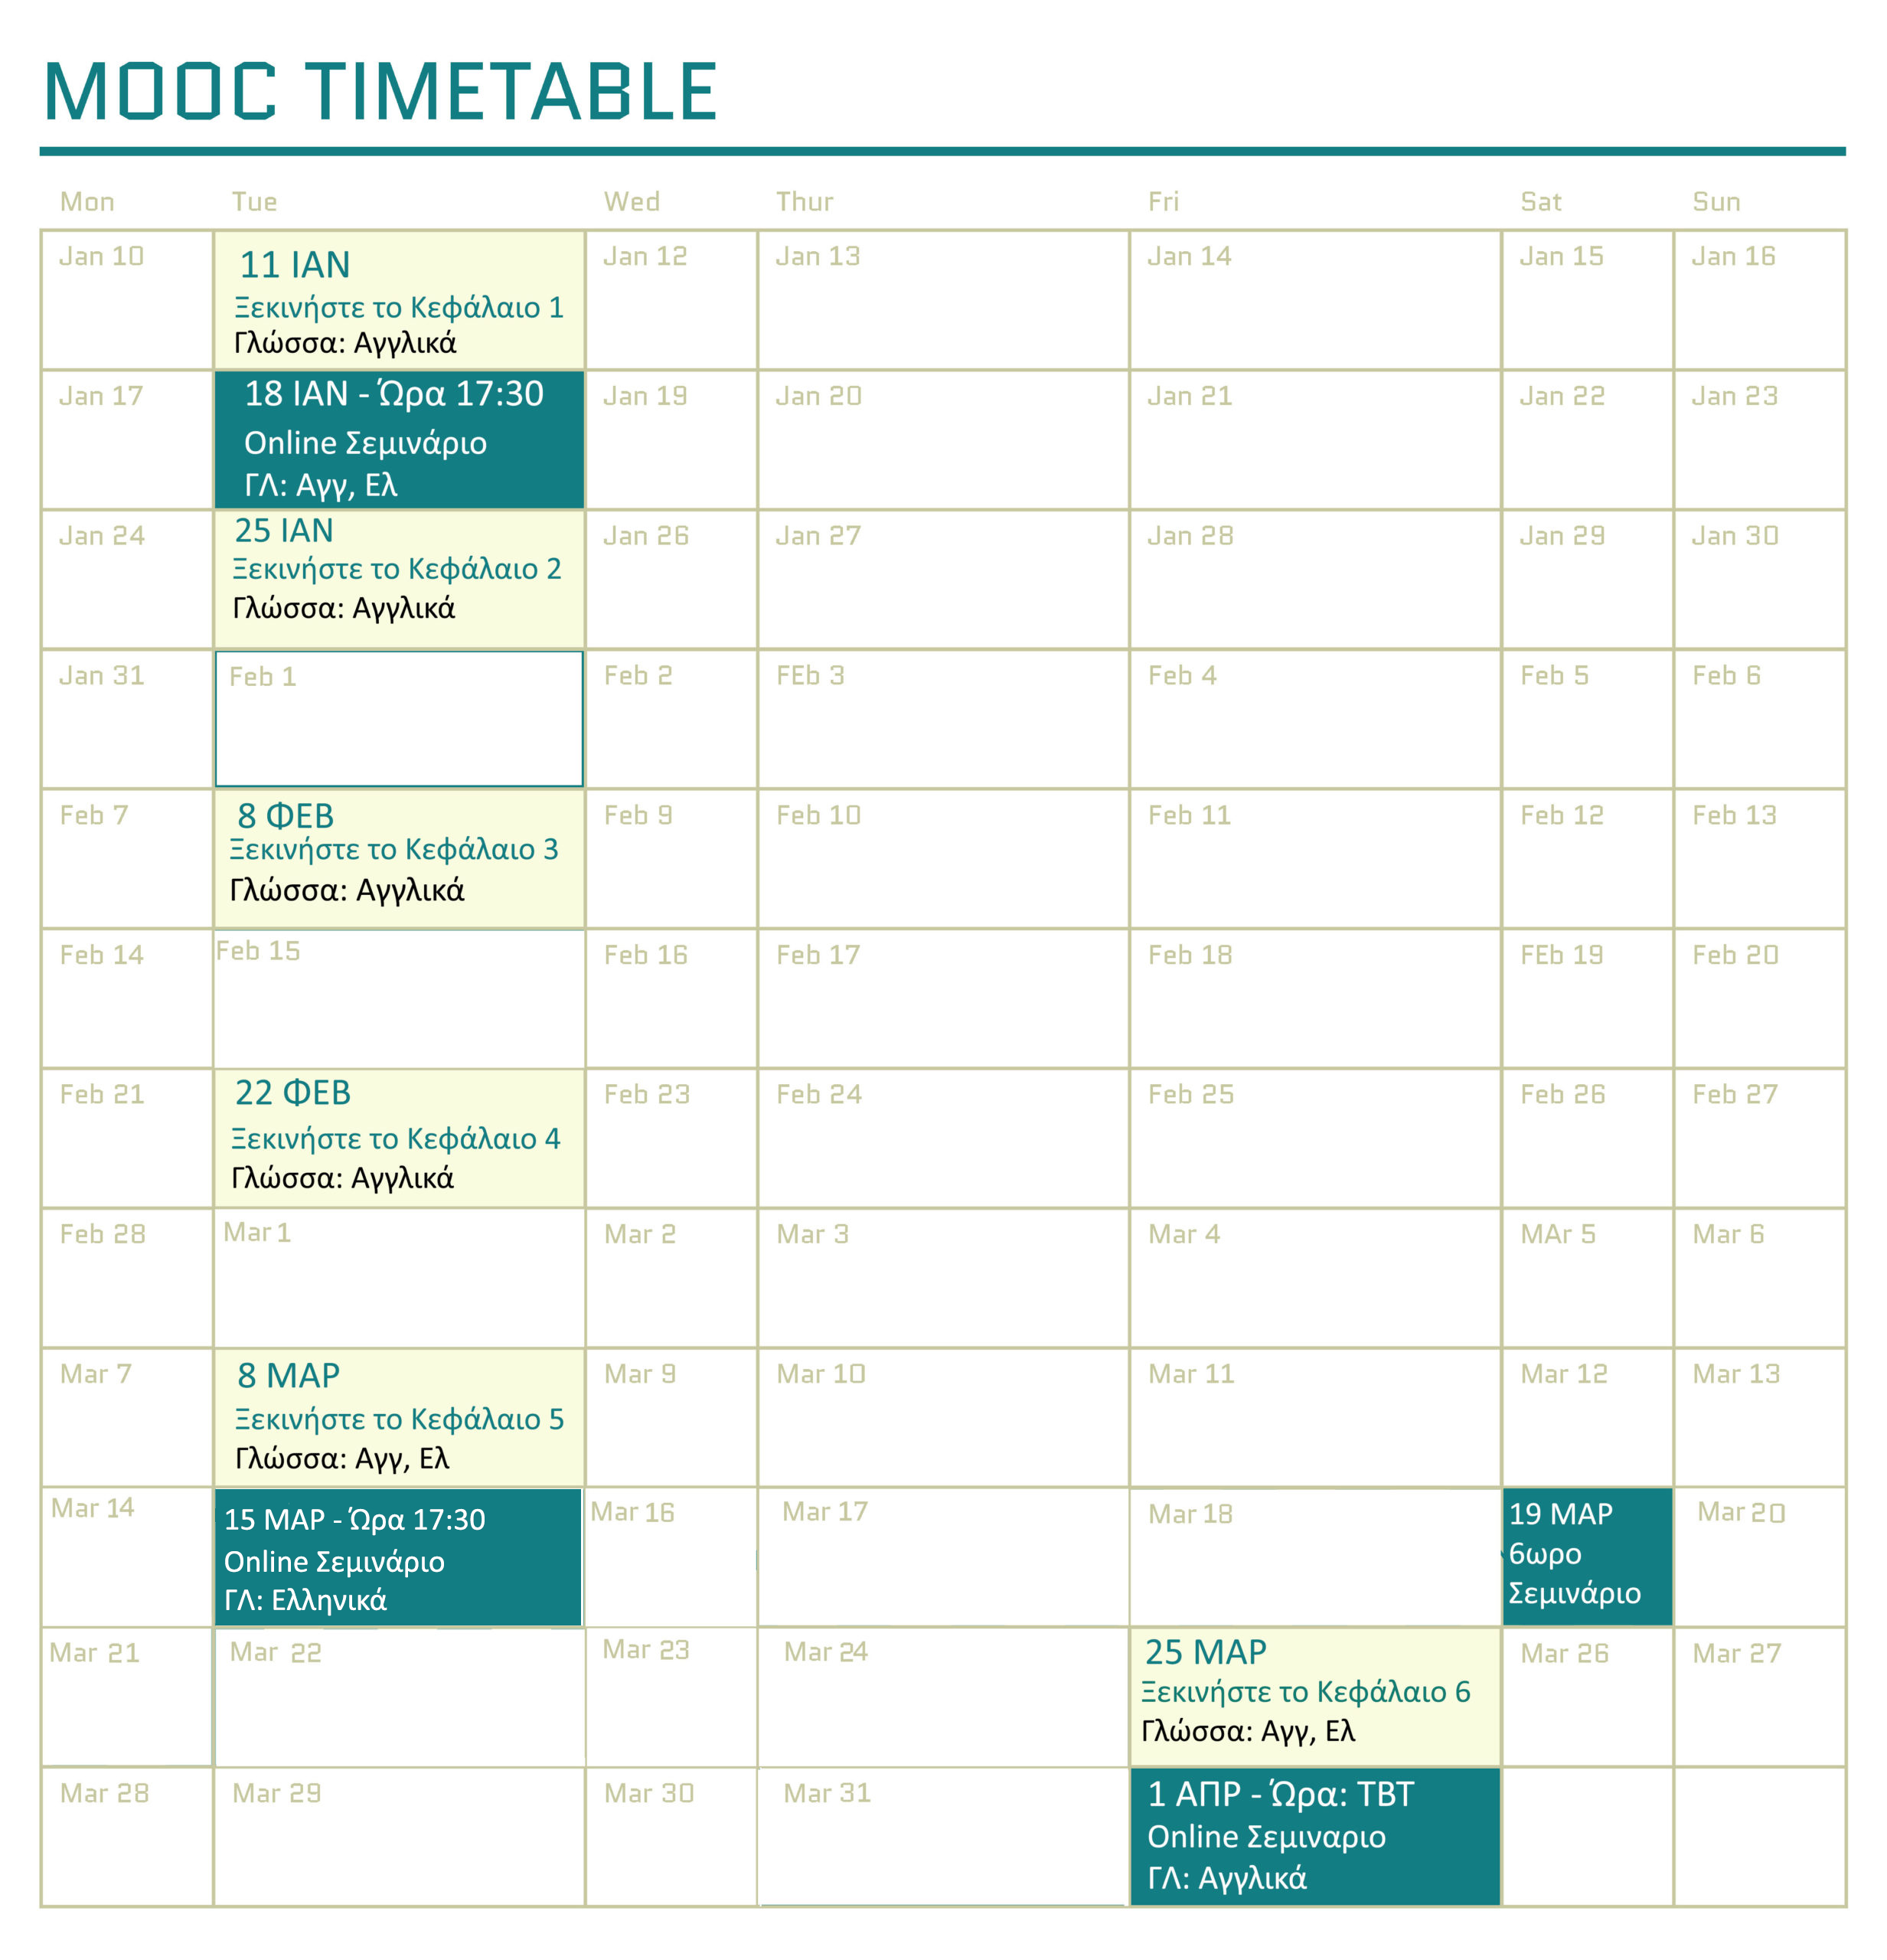 steamulate-mooc-calendar-1-scaled2